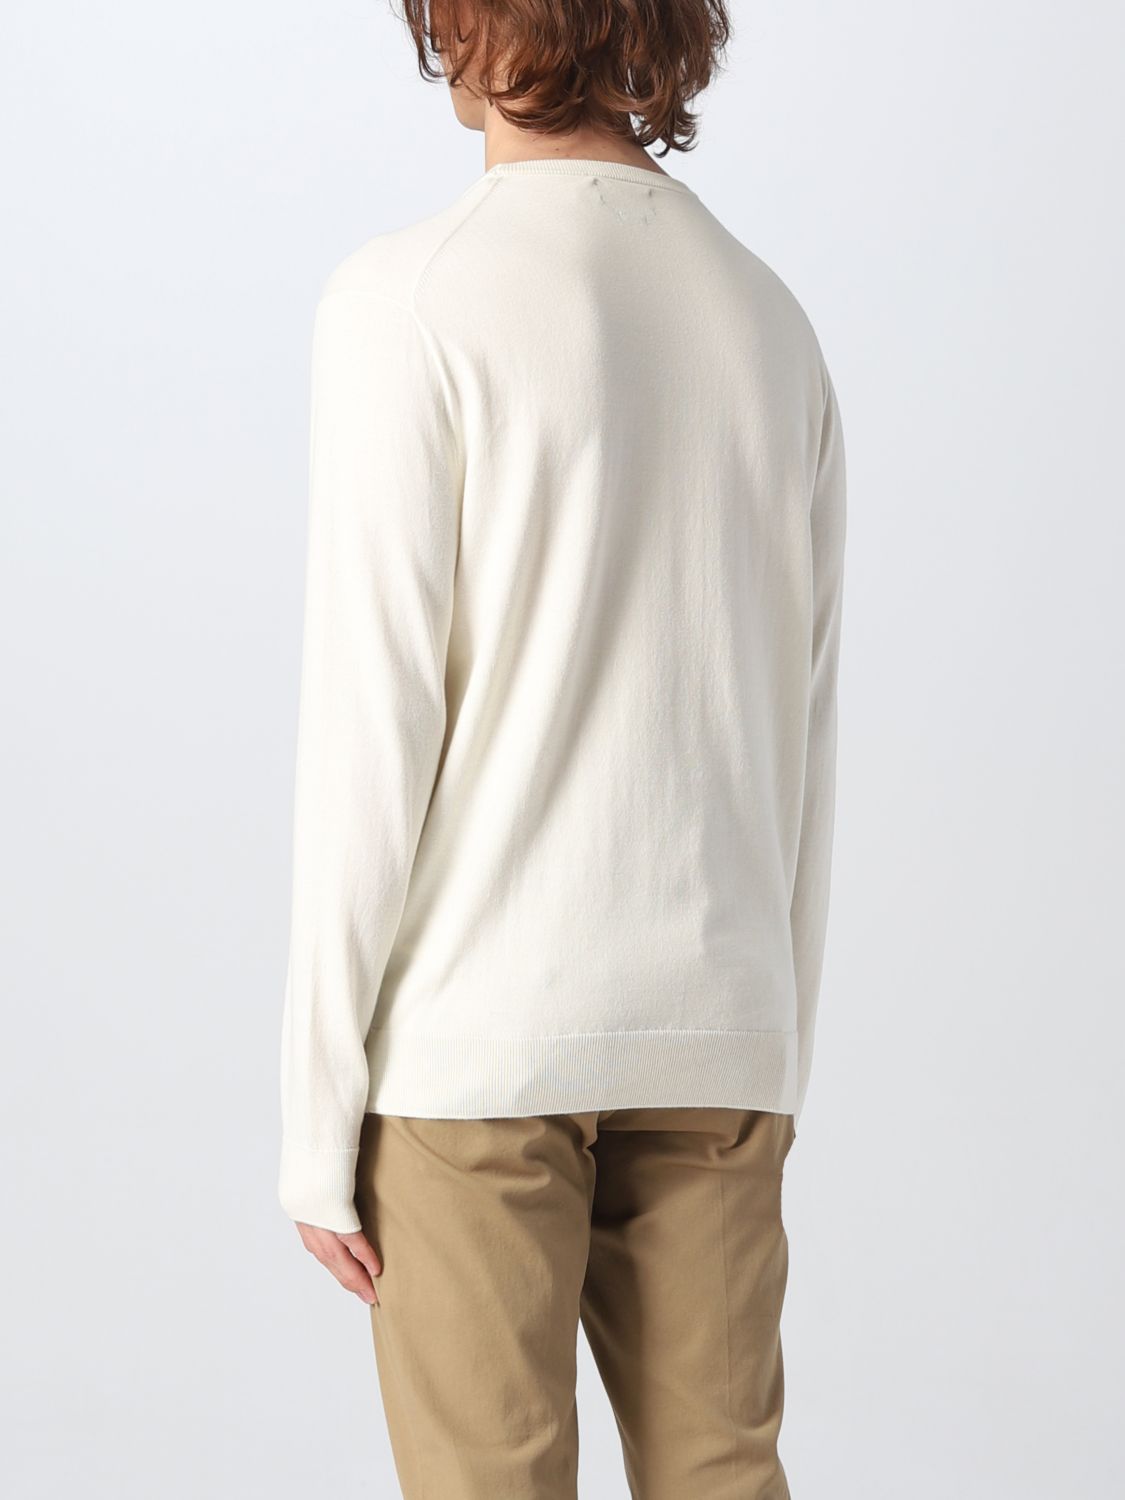 POLO RALPH LAUREN: sweater for man - Cream | Polo Ralph Lauren sweater ...